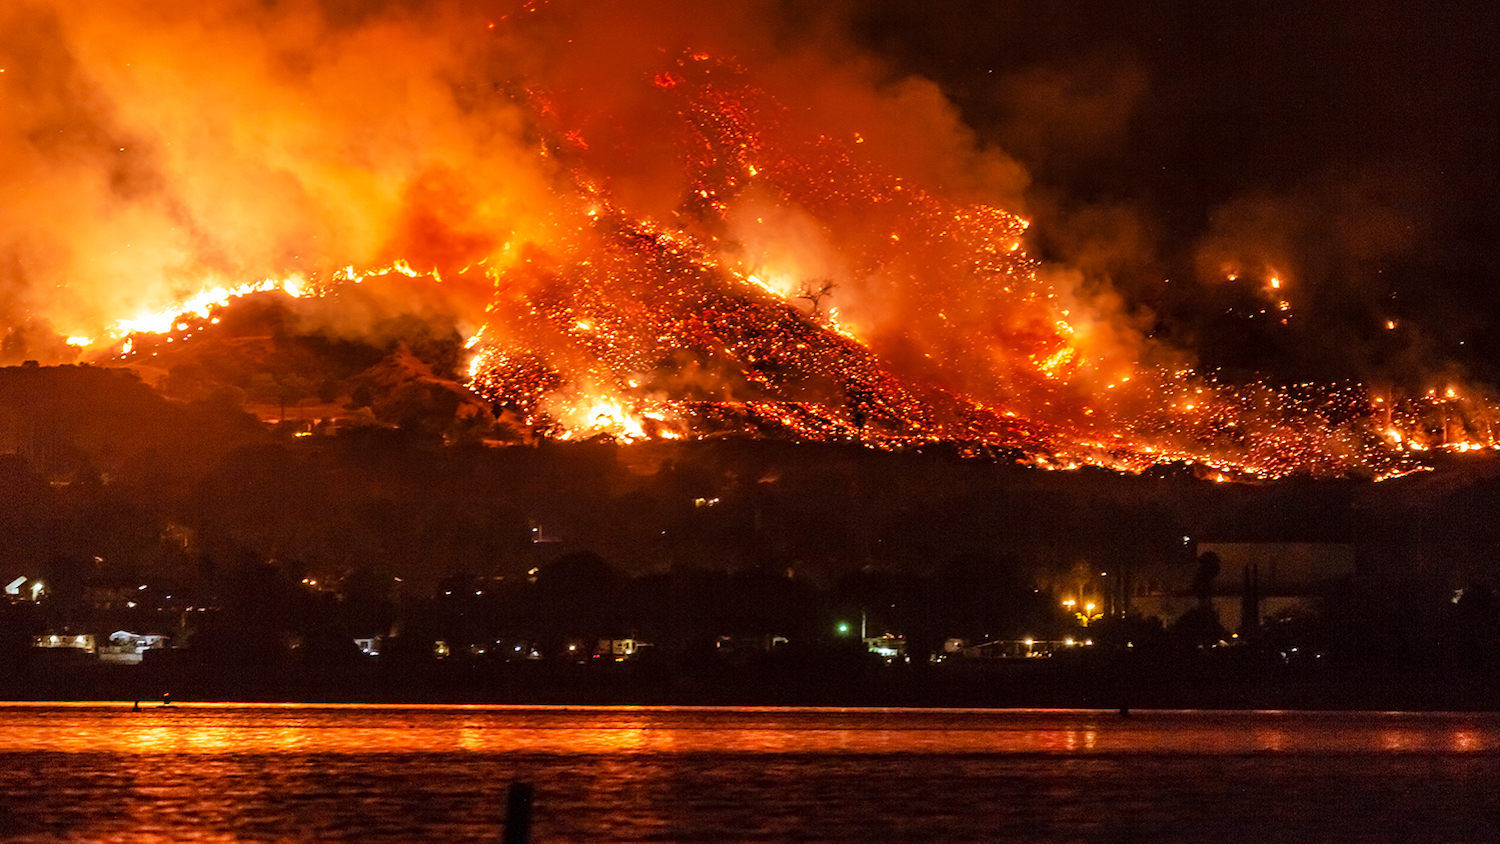 A wildfire burns near a lake in California.